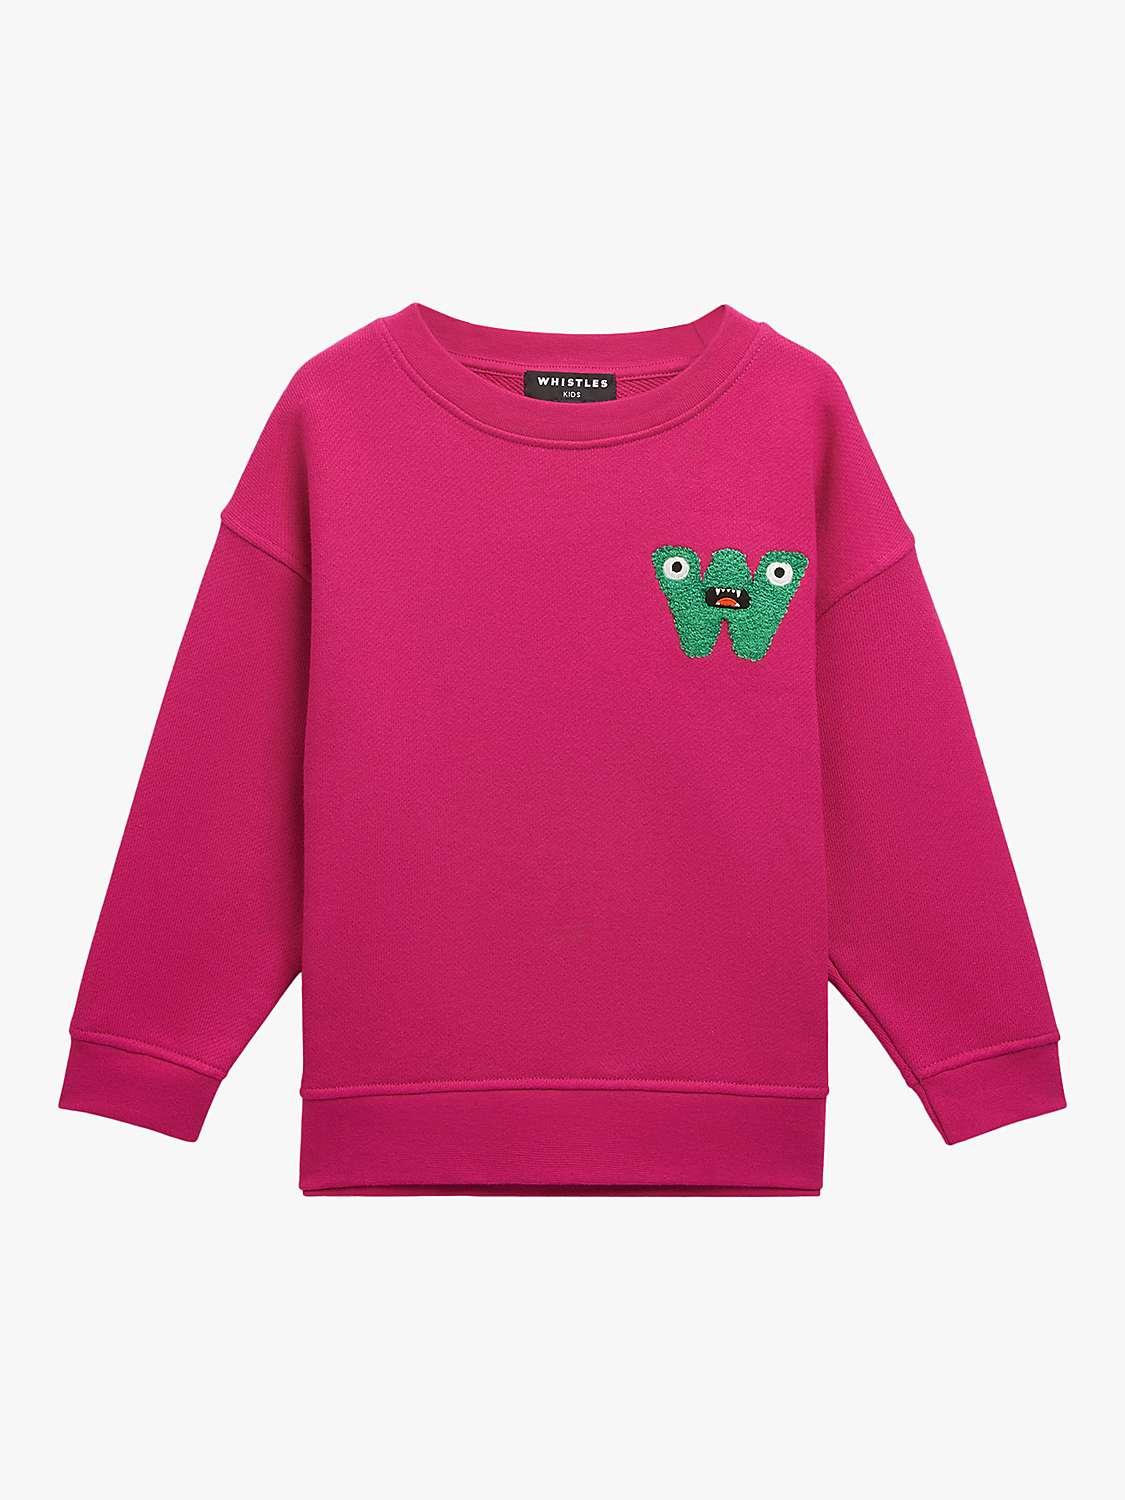 Buy Whistles Kids' Monster Embroidered Sweatshirt, Pink Online at johnlewis.com